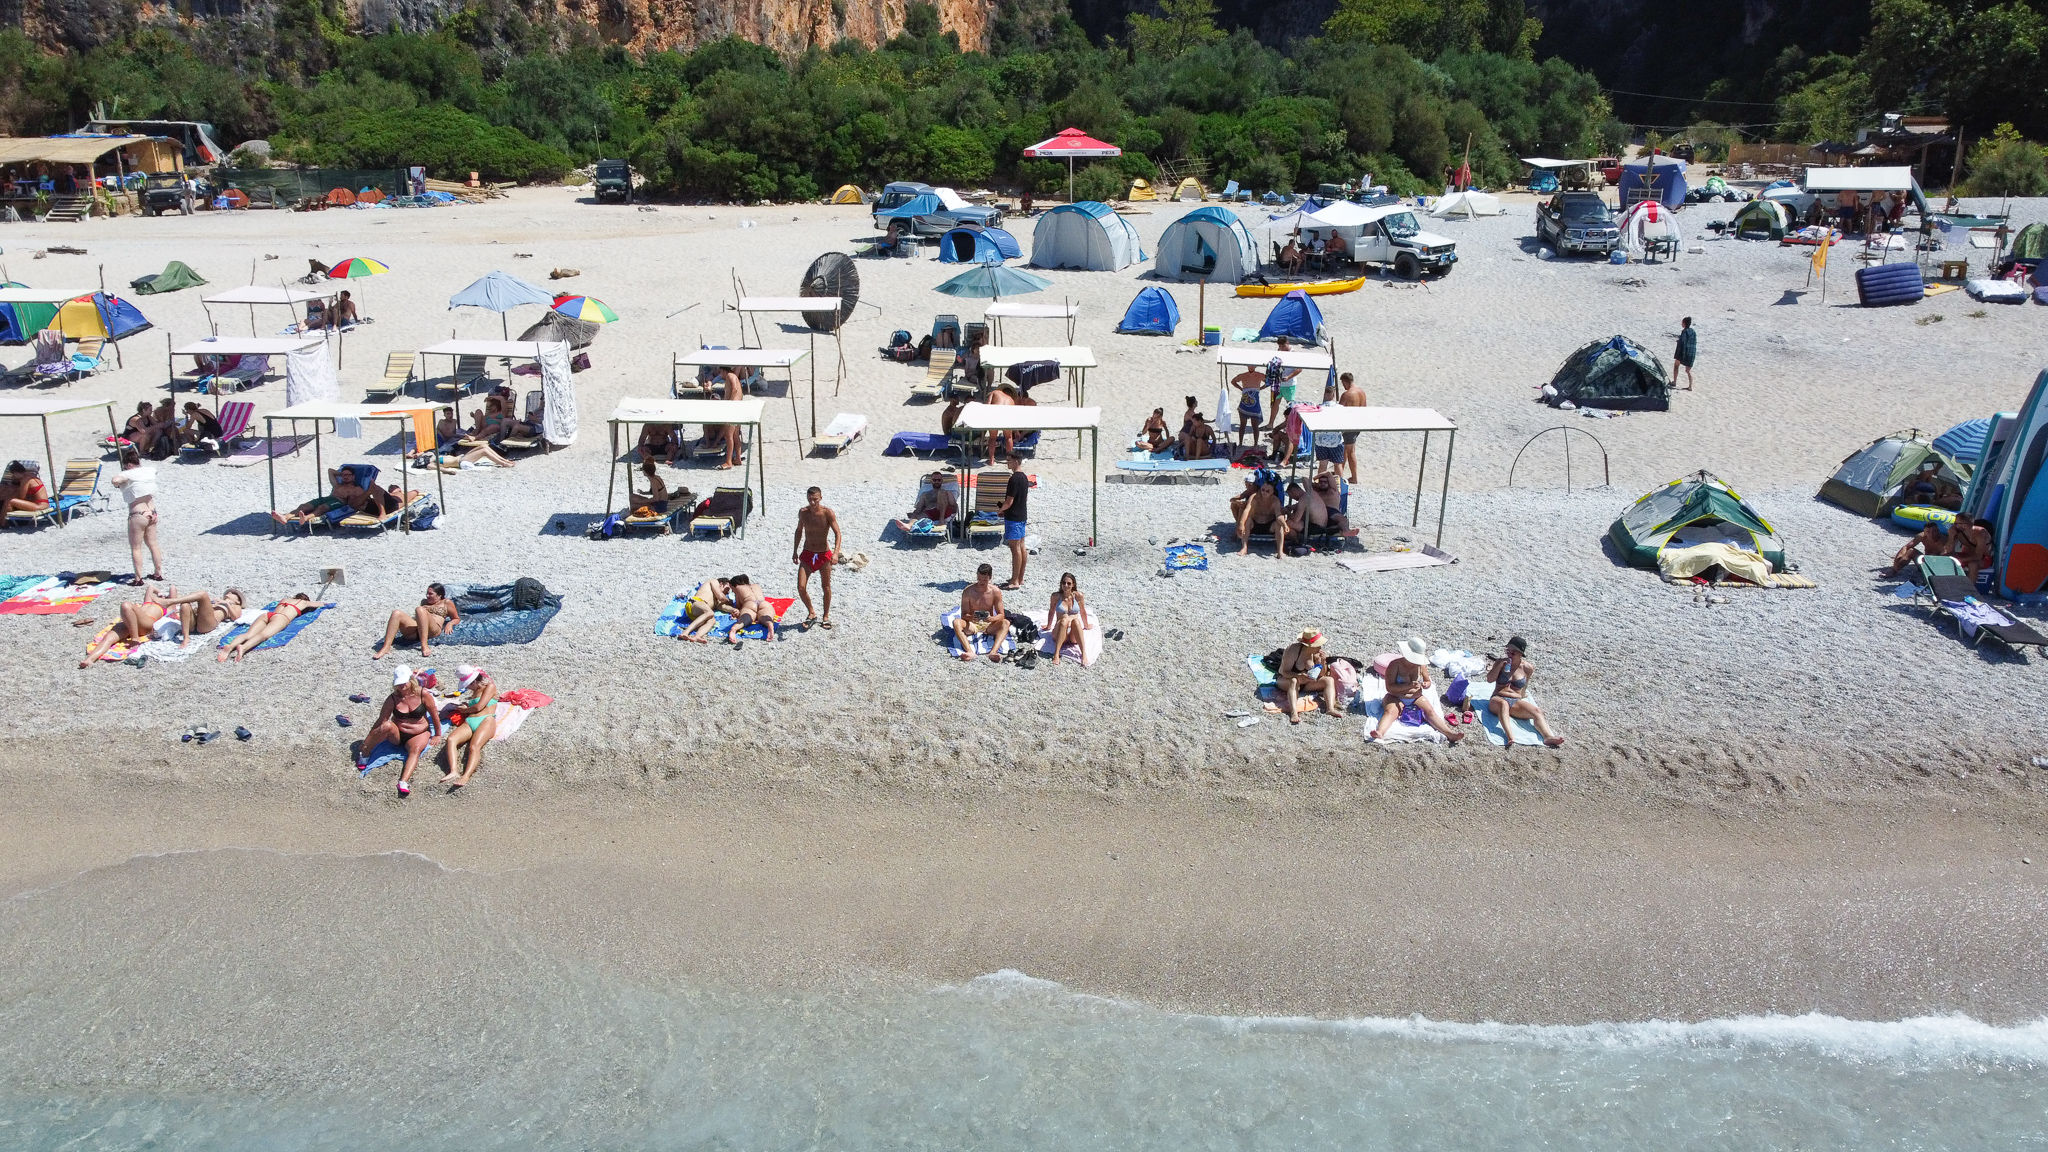 Best Beach Albanian Riviera Europe